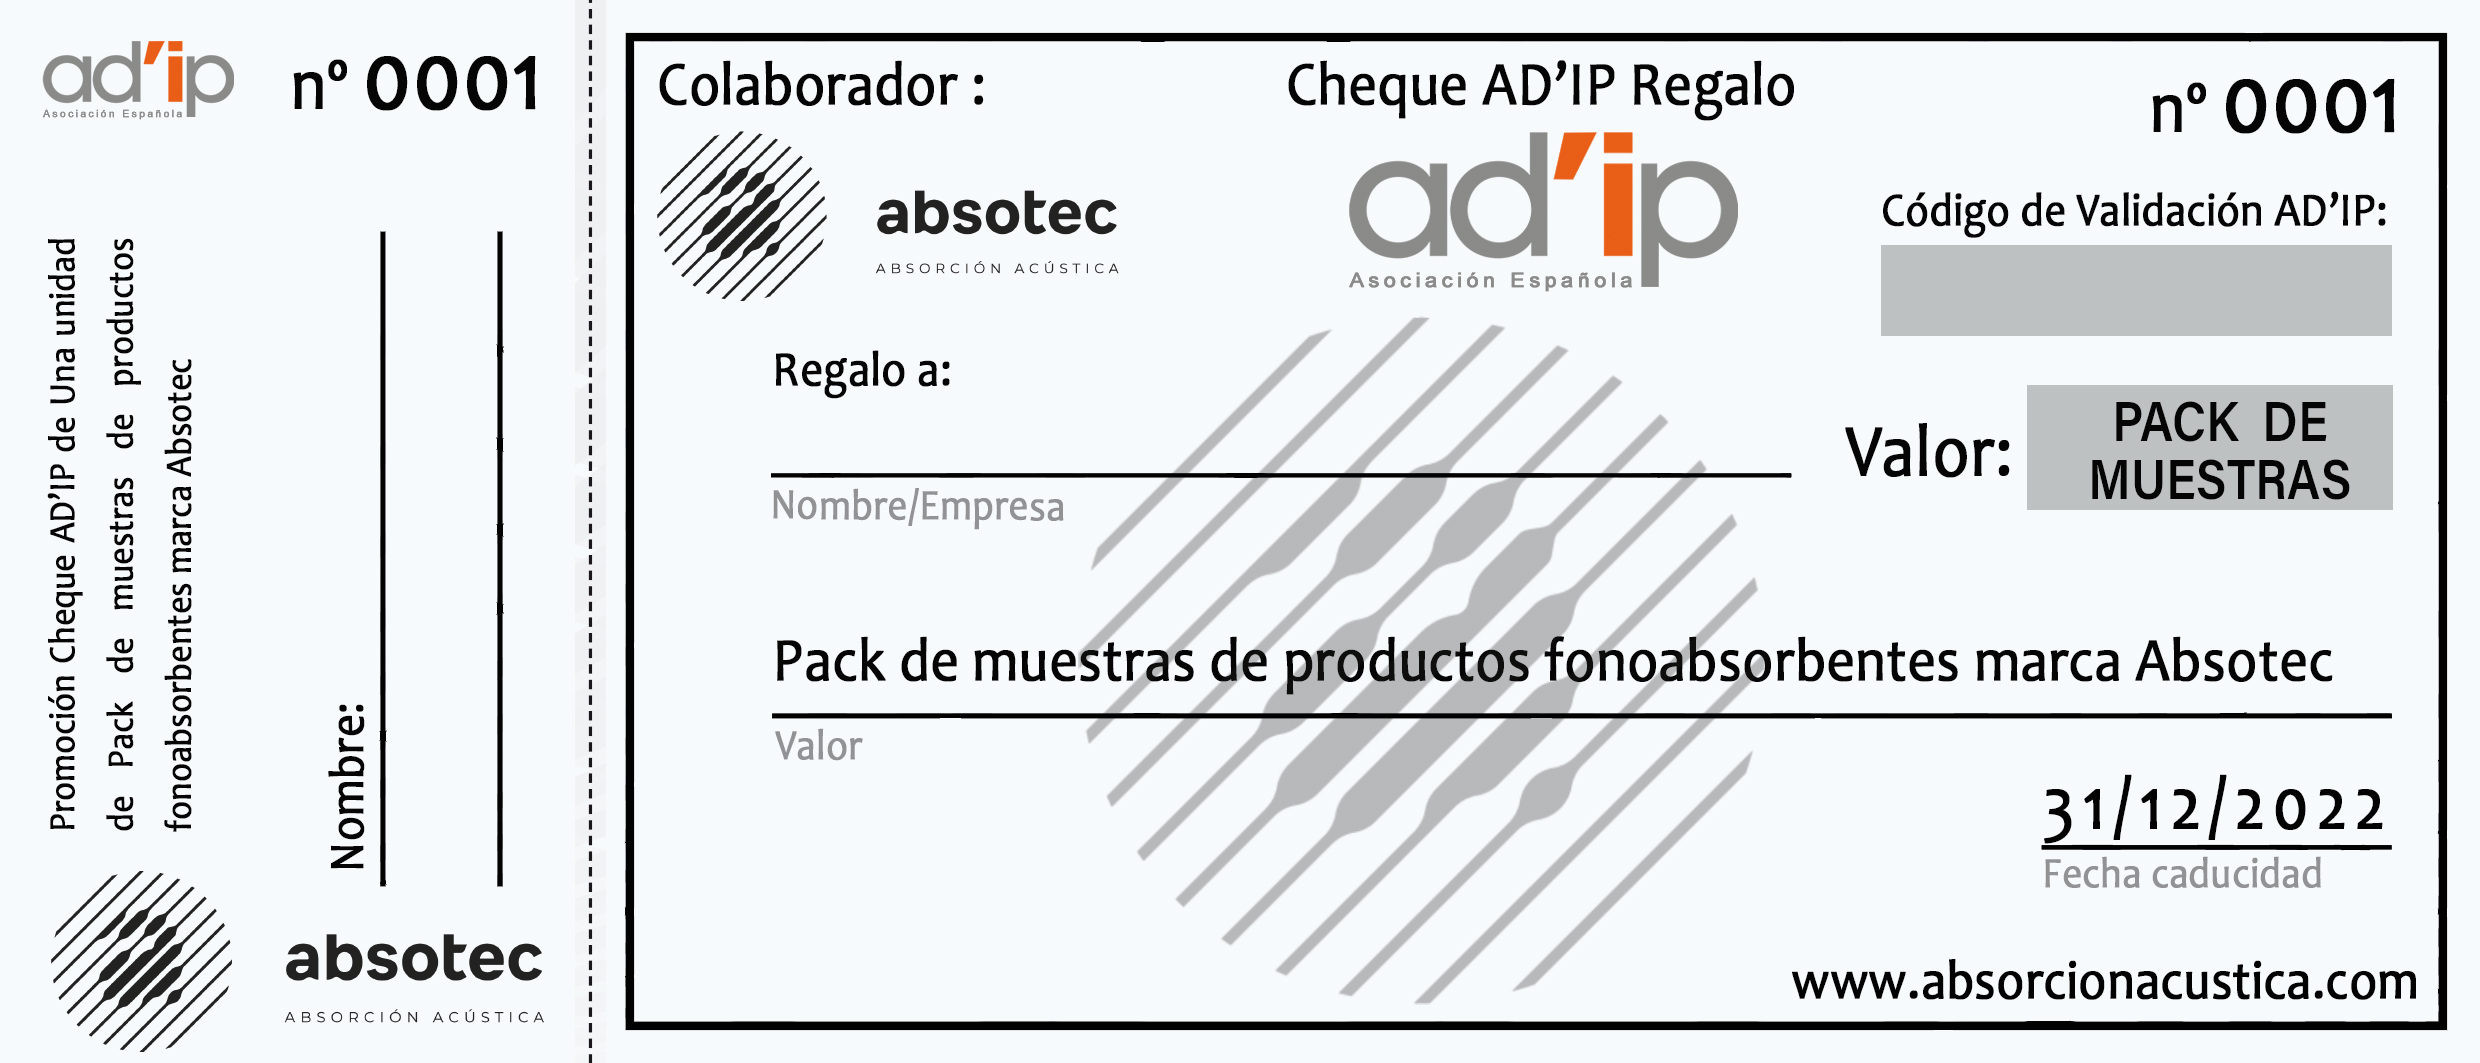 CHEQUE-AD'IP-REGALO-ABSOTEC-2022